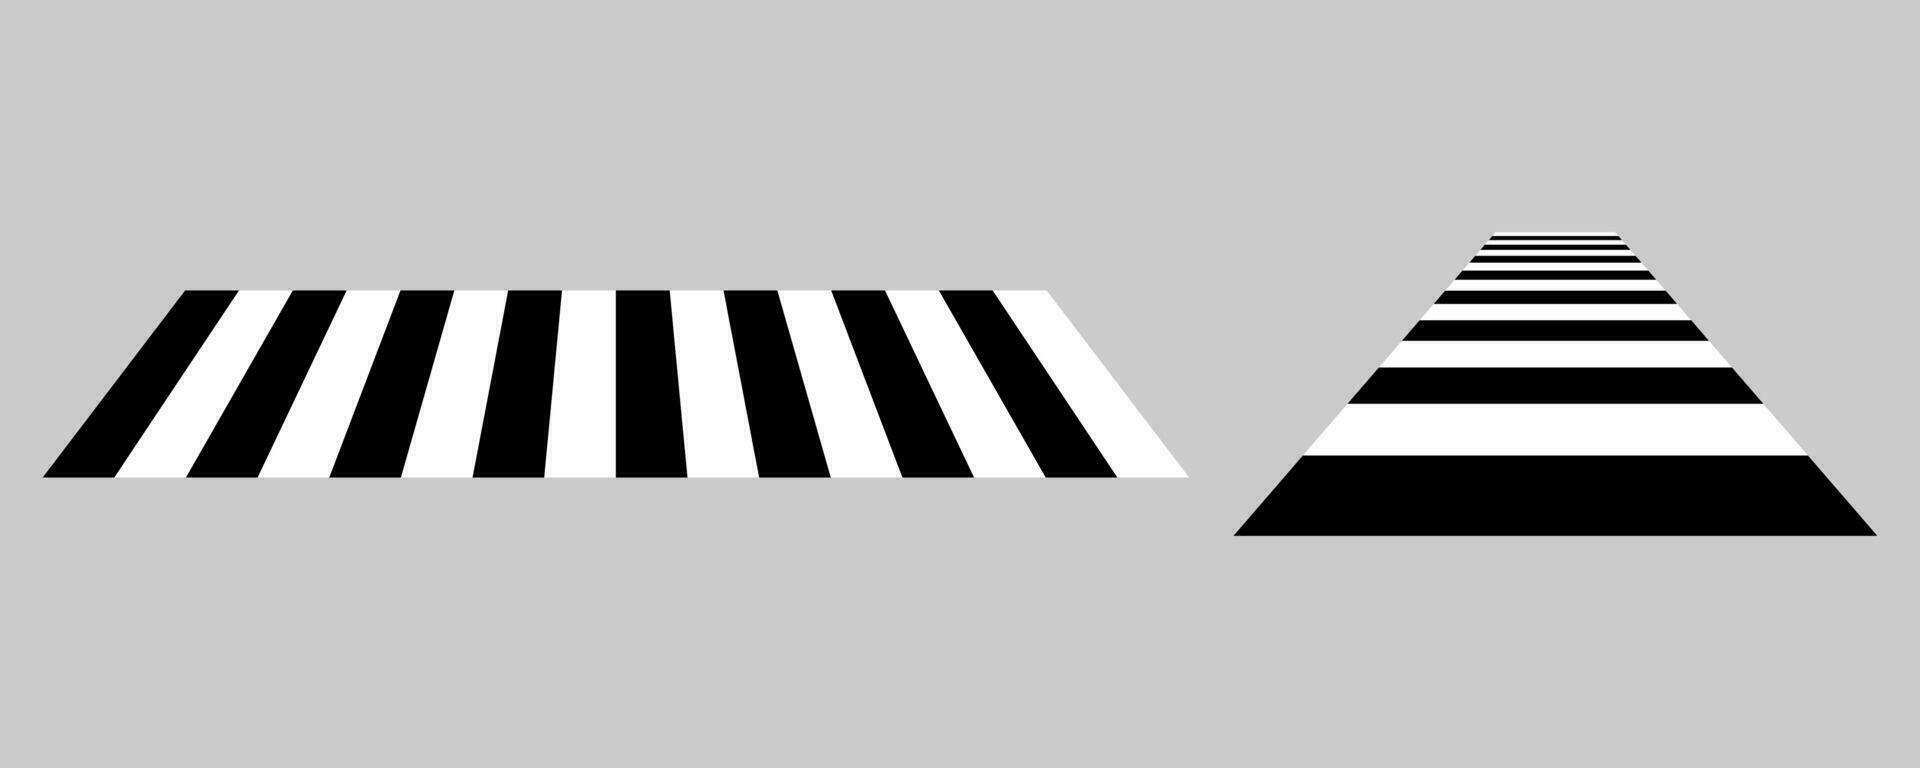 black white pedestrian crossing icon vector